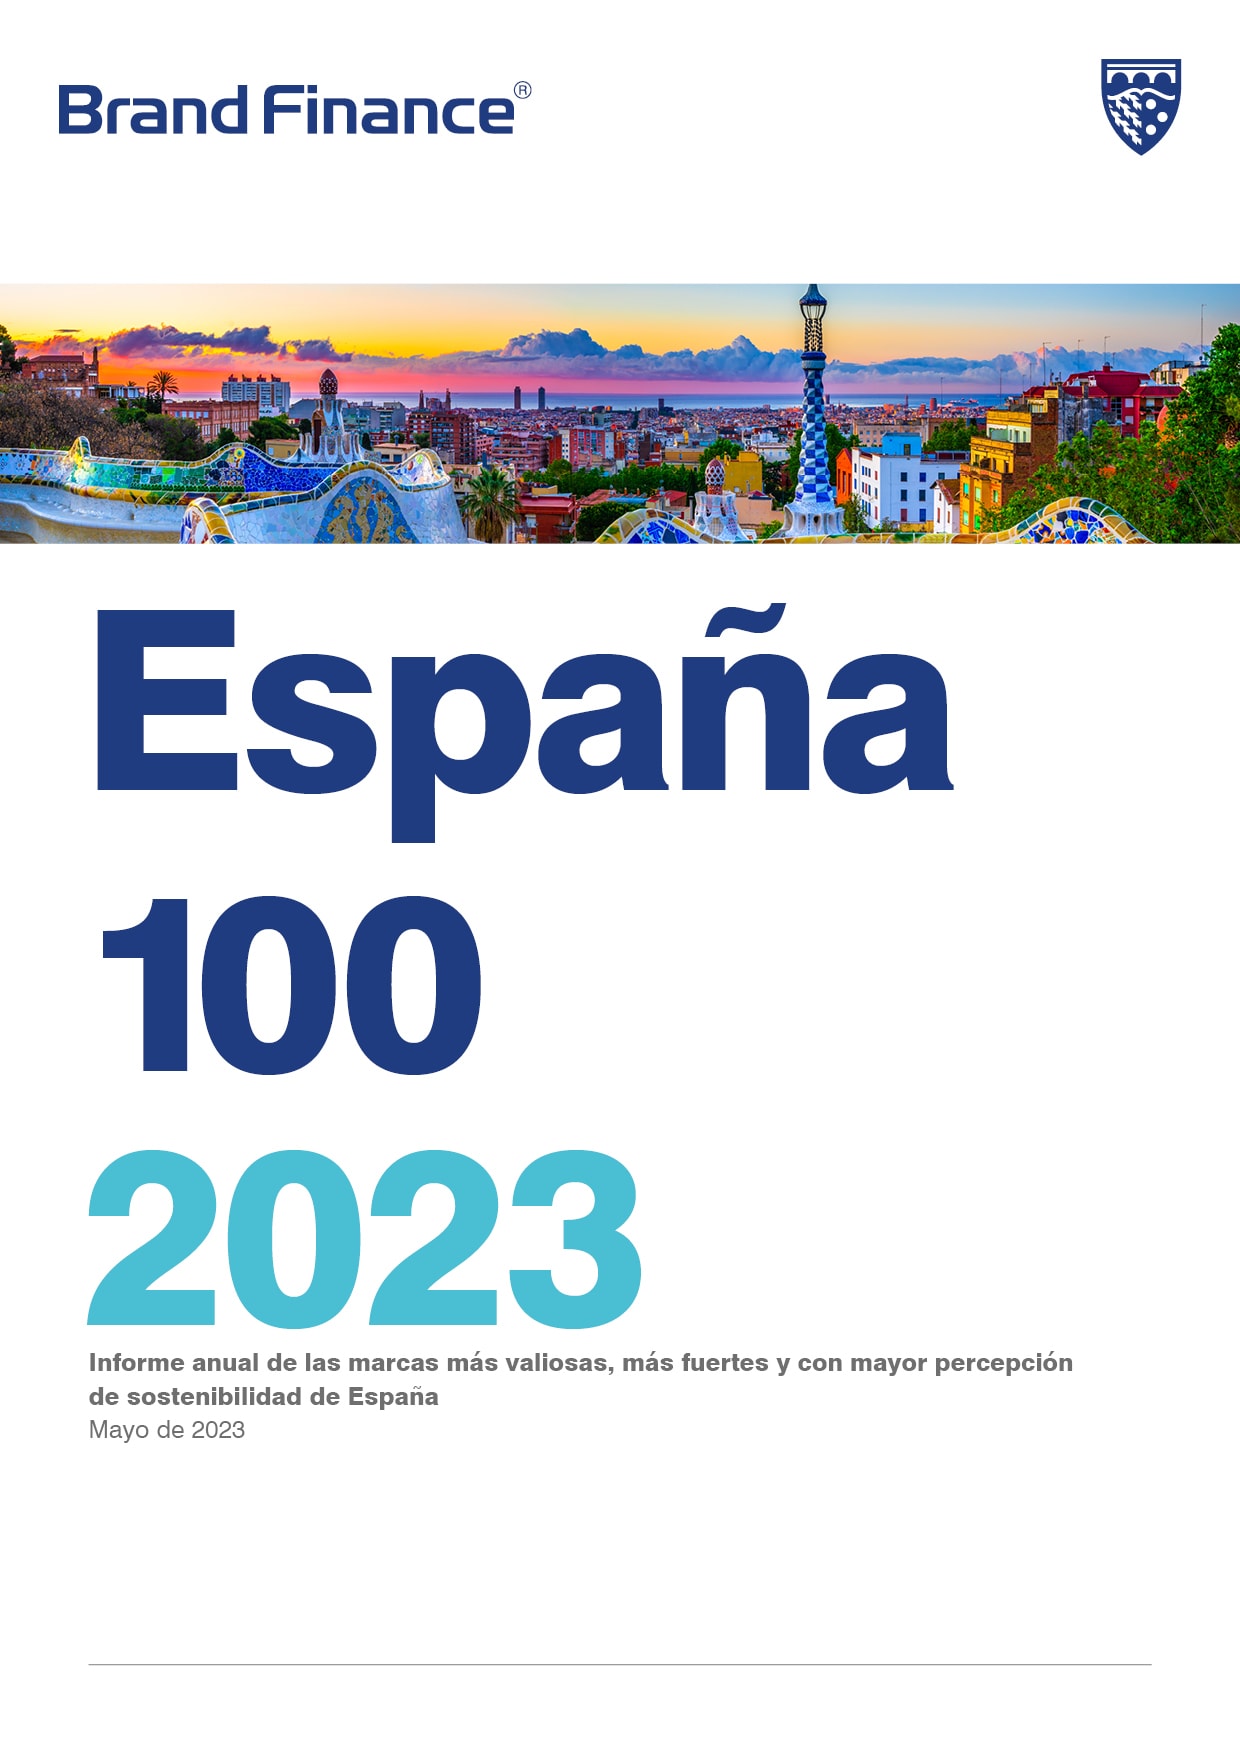 Brand Finance Spain 100 2023